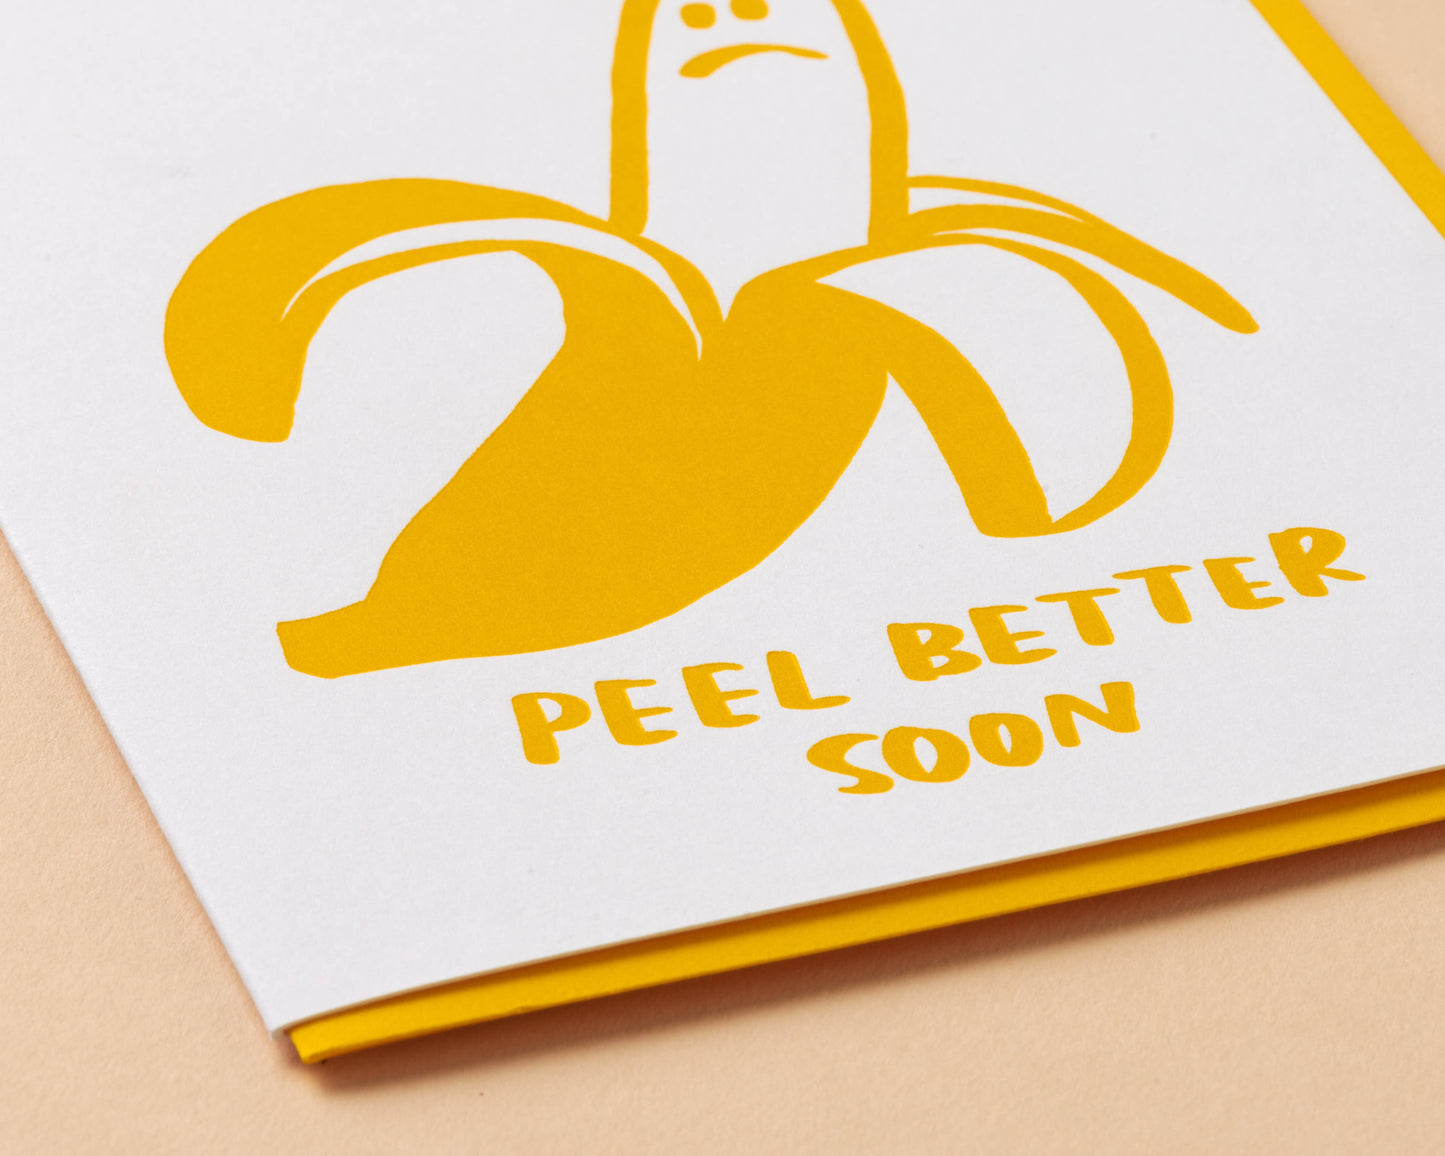 Peel Better Banana Get Well Soon Letterpress Greeting Card